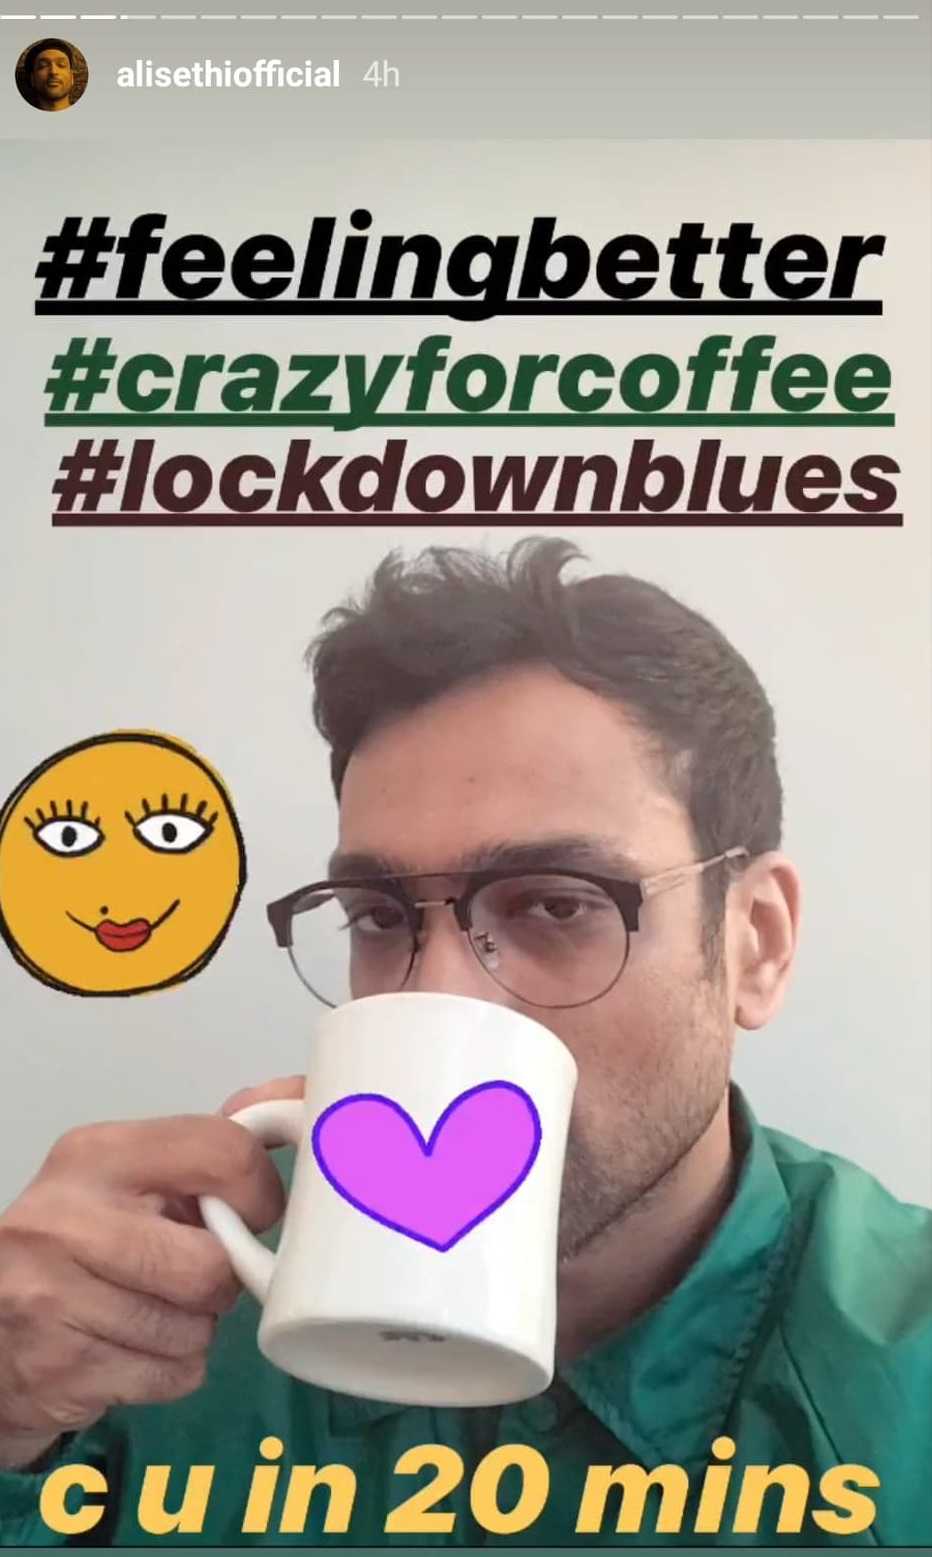 5 Pakistani Celebrities To Follow During Lockdown